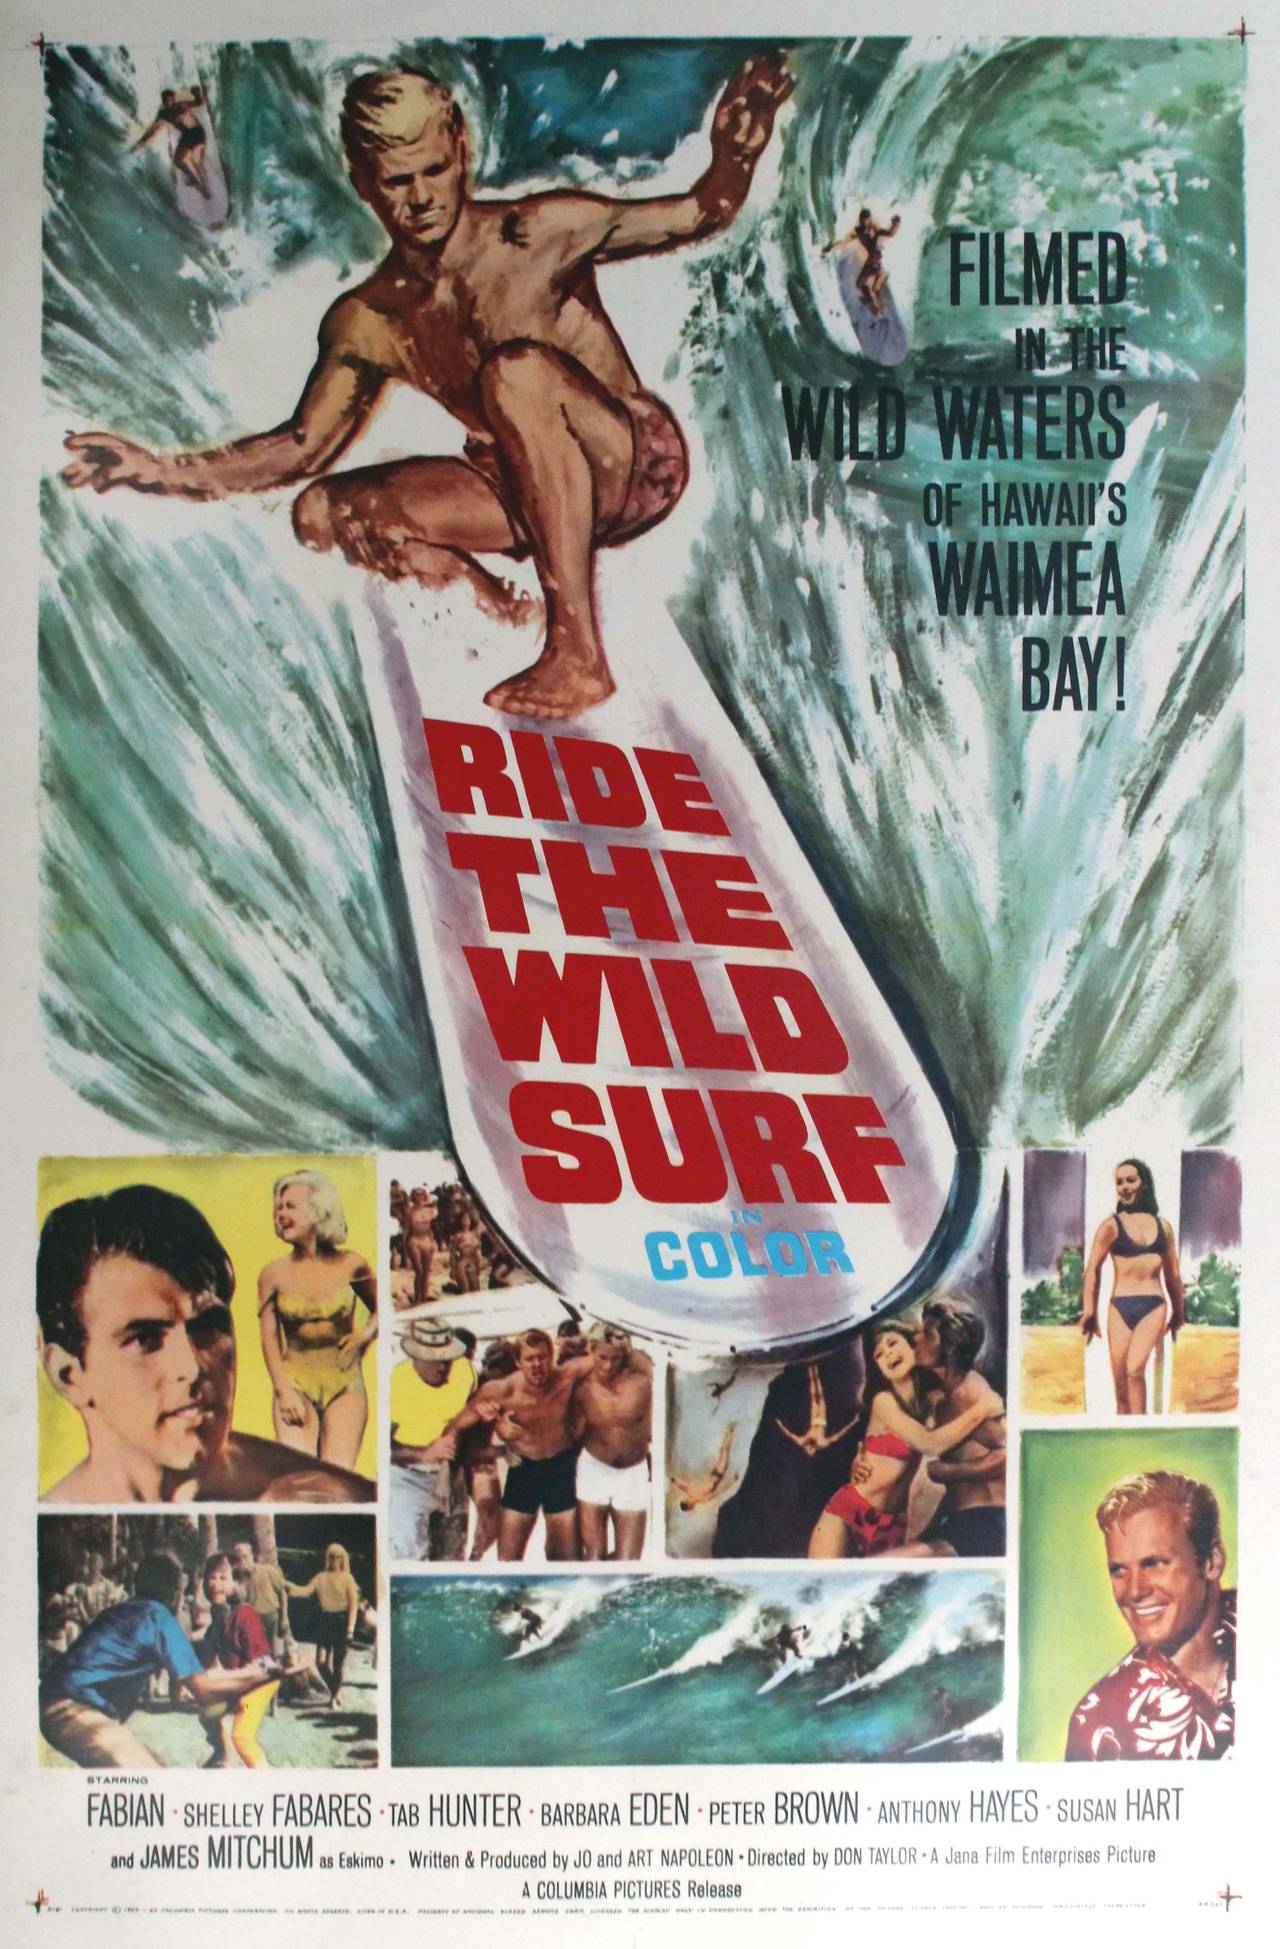 Unknown Print - Original Vintage Surfing Movie Poster - Ride The Wild Surf - Waimea Bay Hawaii